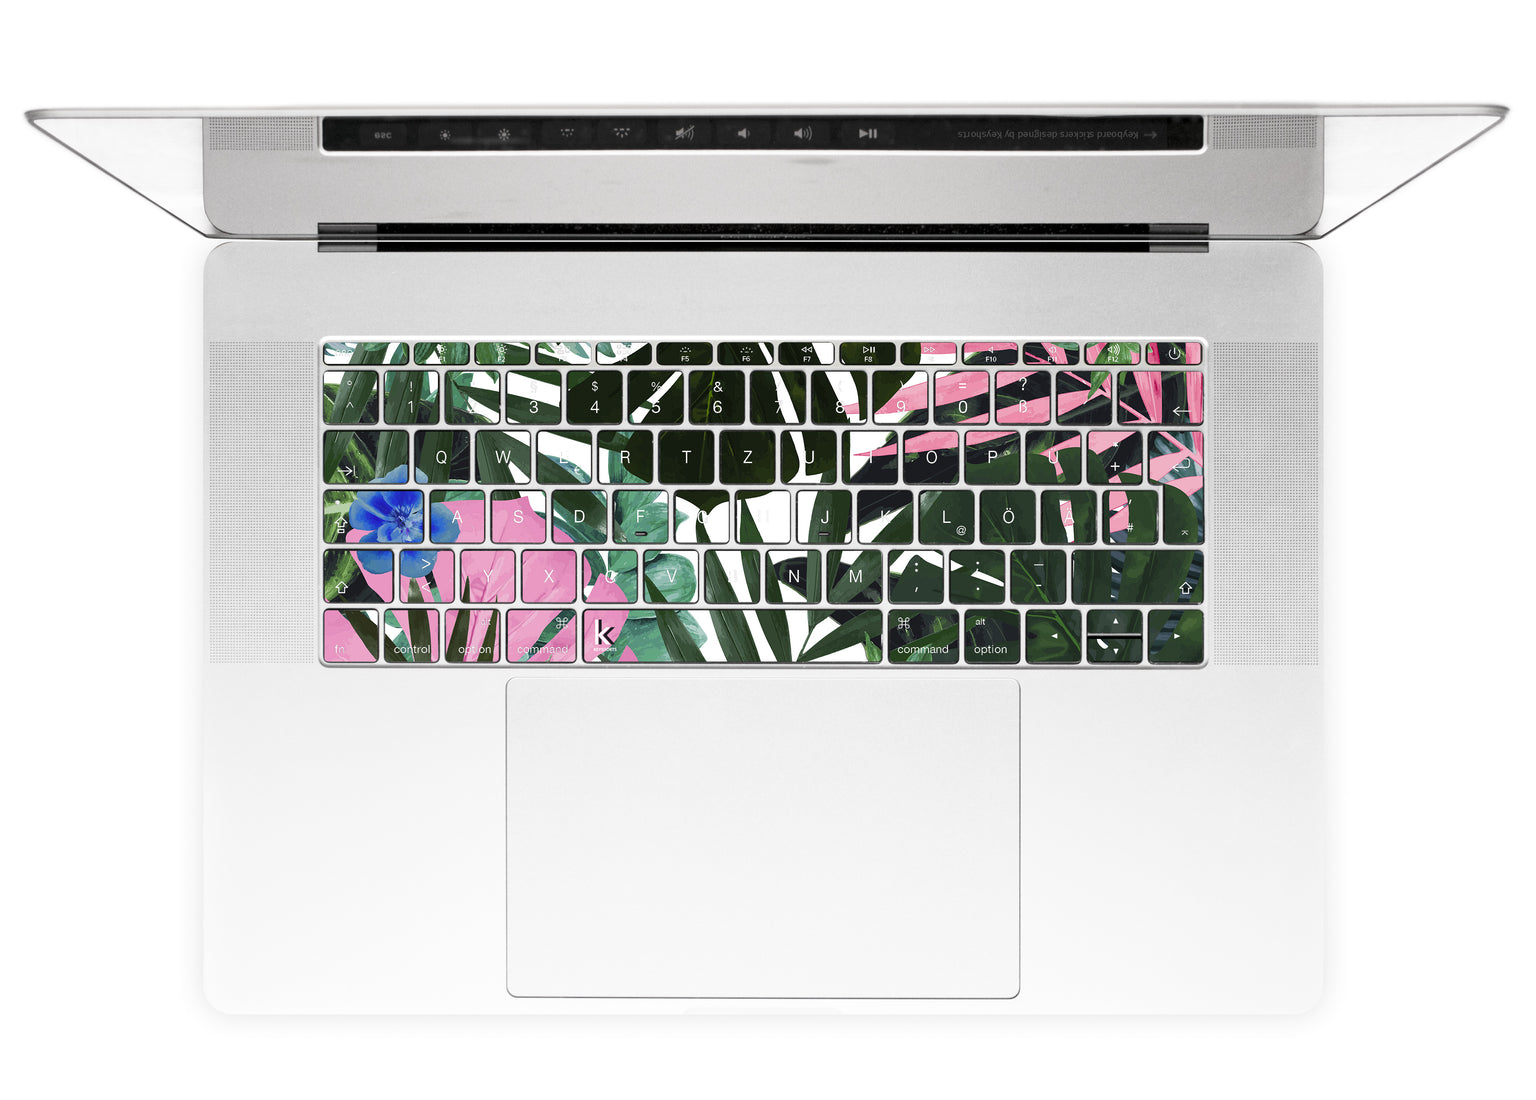 Jungle Times MacBook Keyboard Stickers alternate German